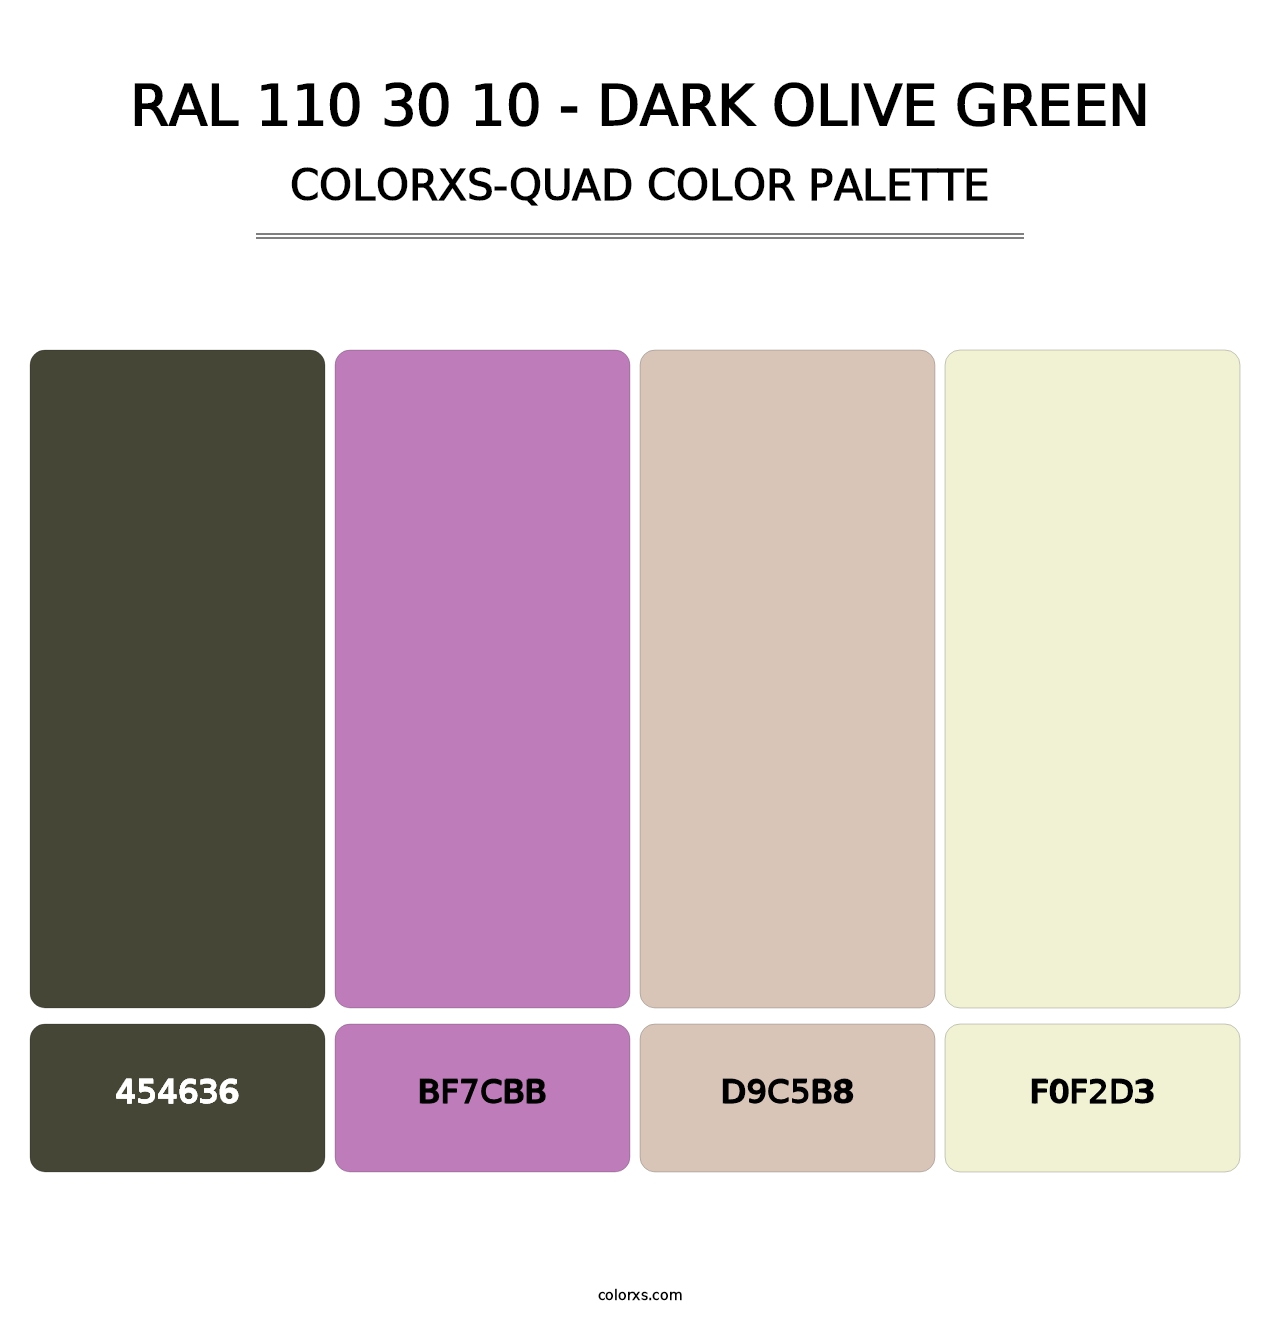 RAL 110 30 10 - Dark Olive Green - Colorxs Quad Palette